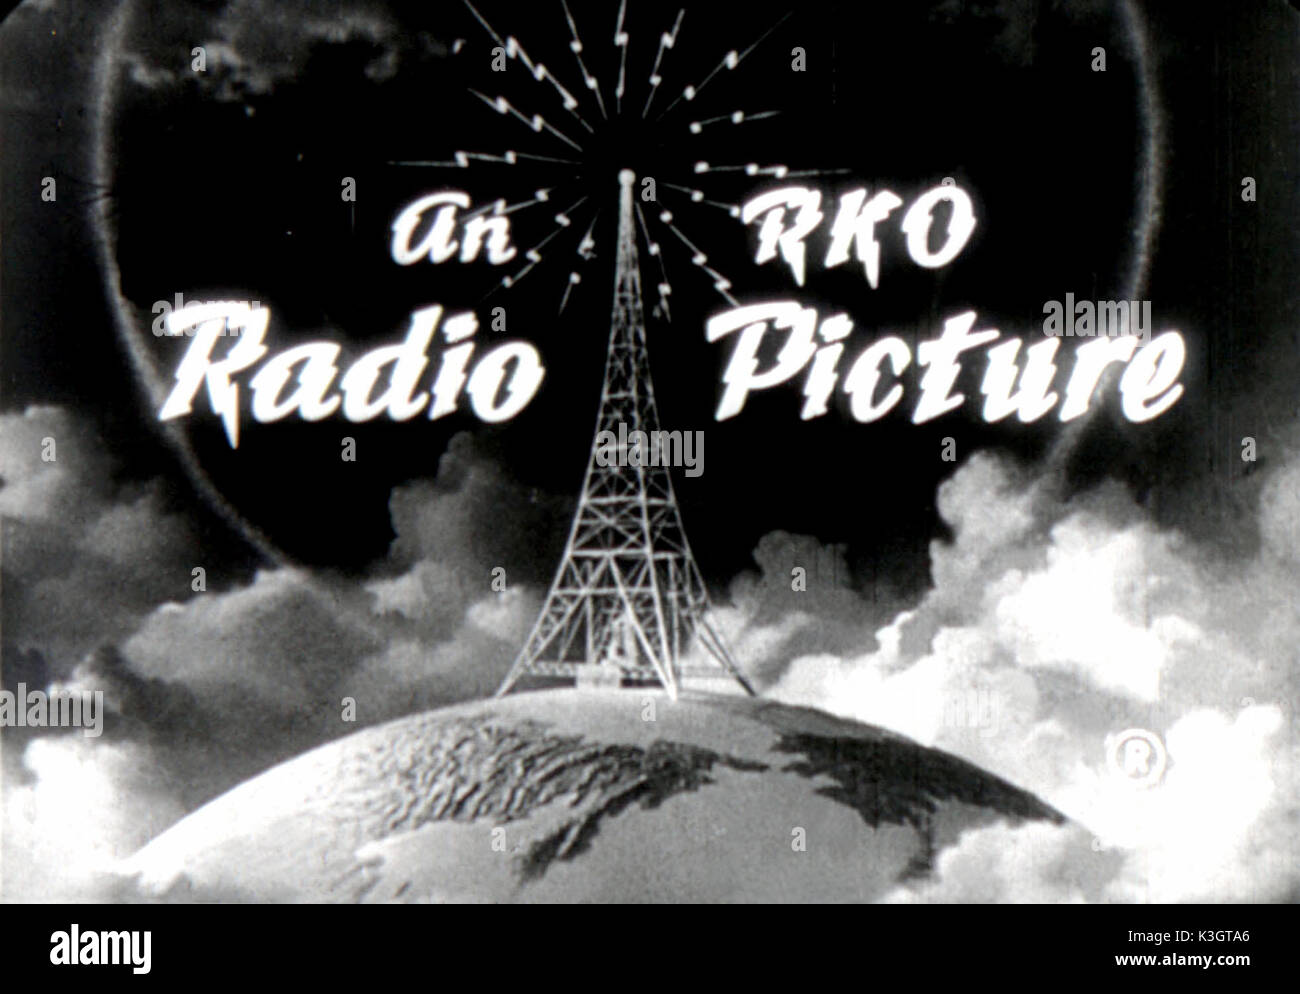 RKO RADIO LOGO RKO RADIO PICTURES LOGO Stock Photo - Alamy